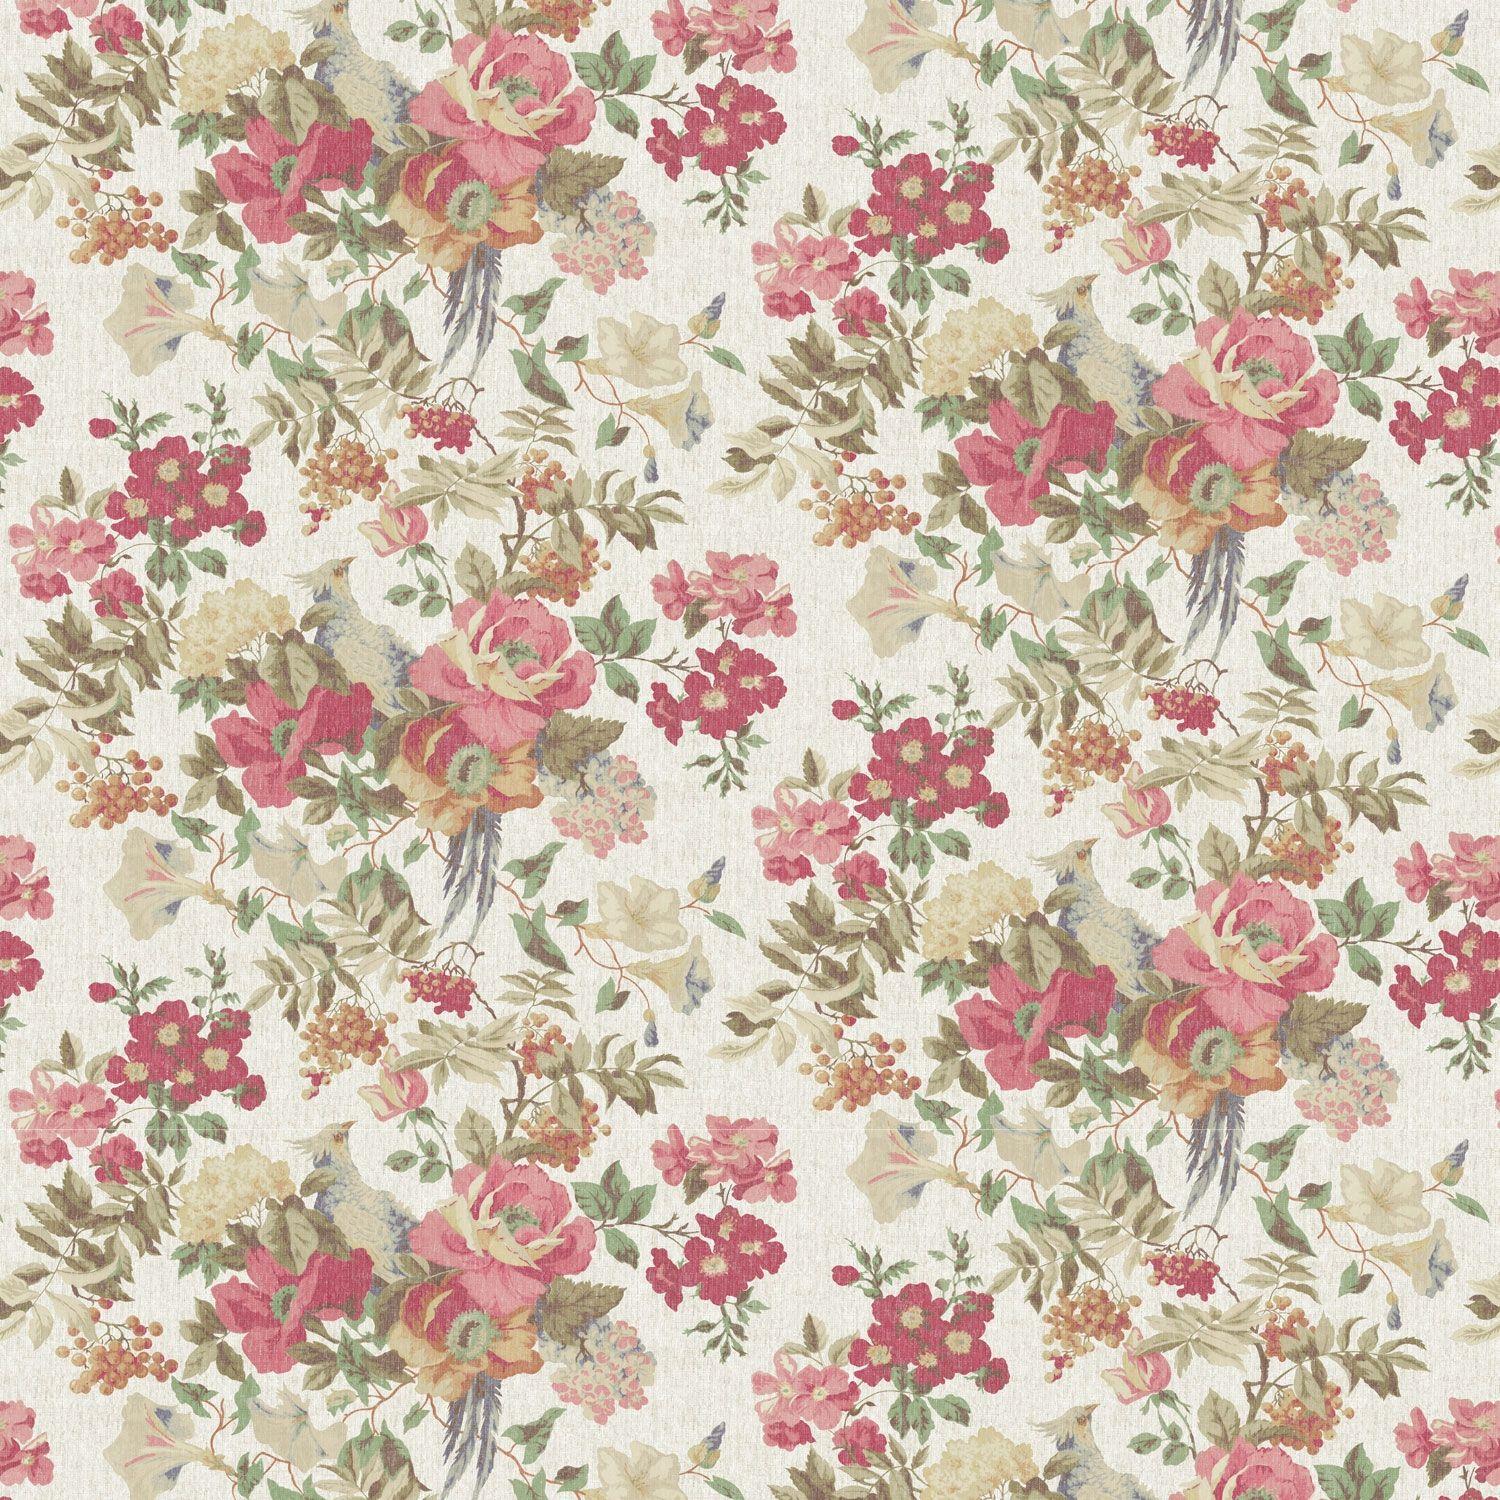 vintage floral wallpapers hd